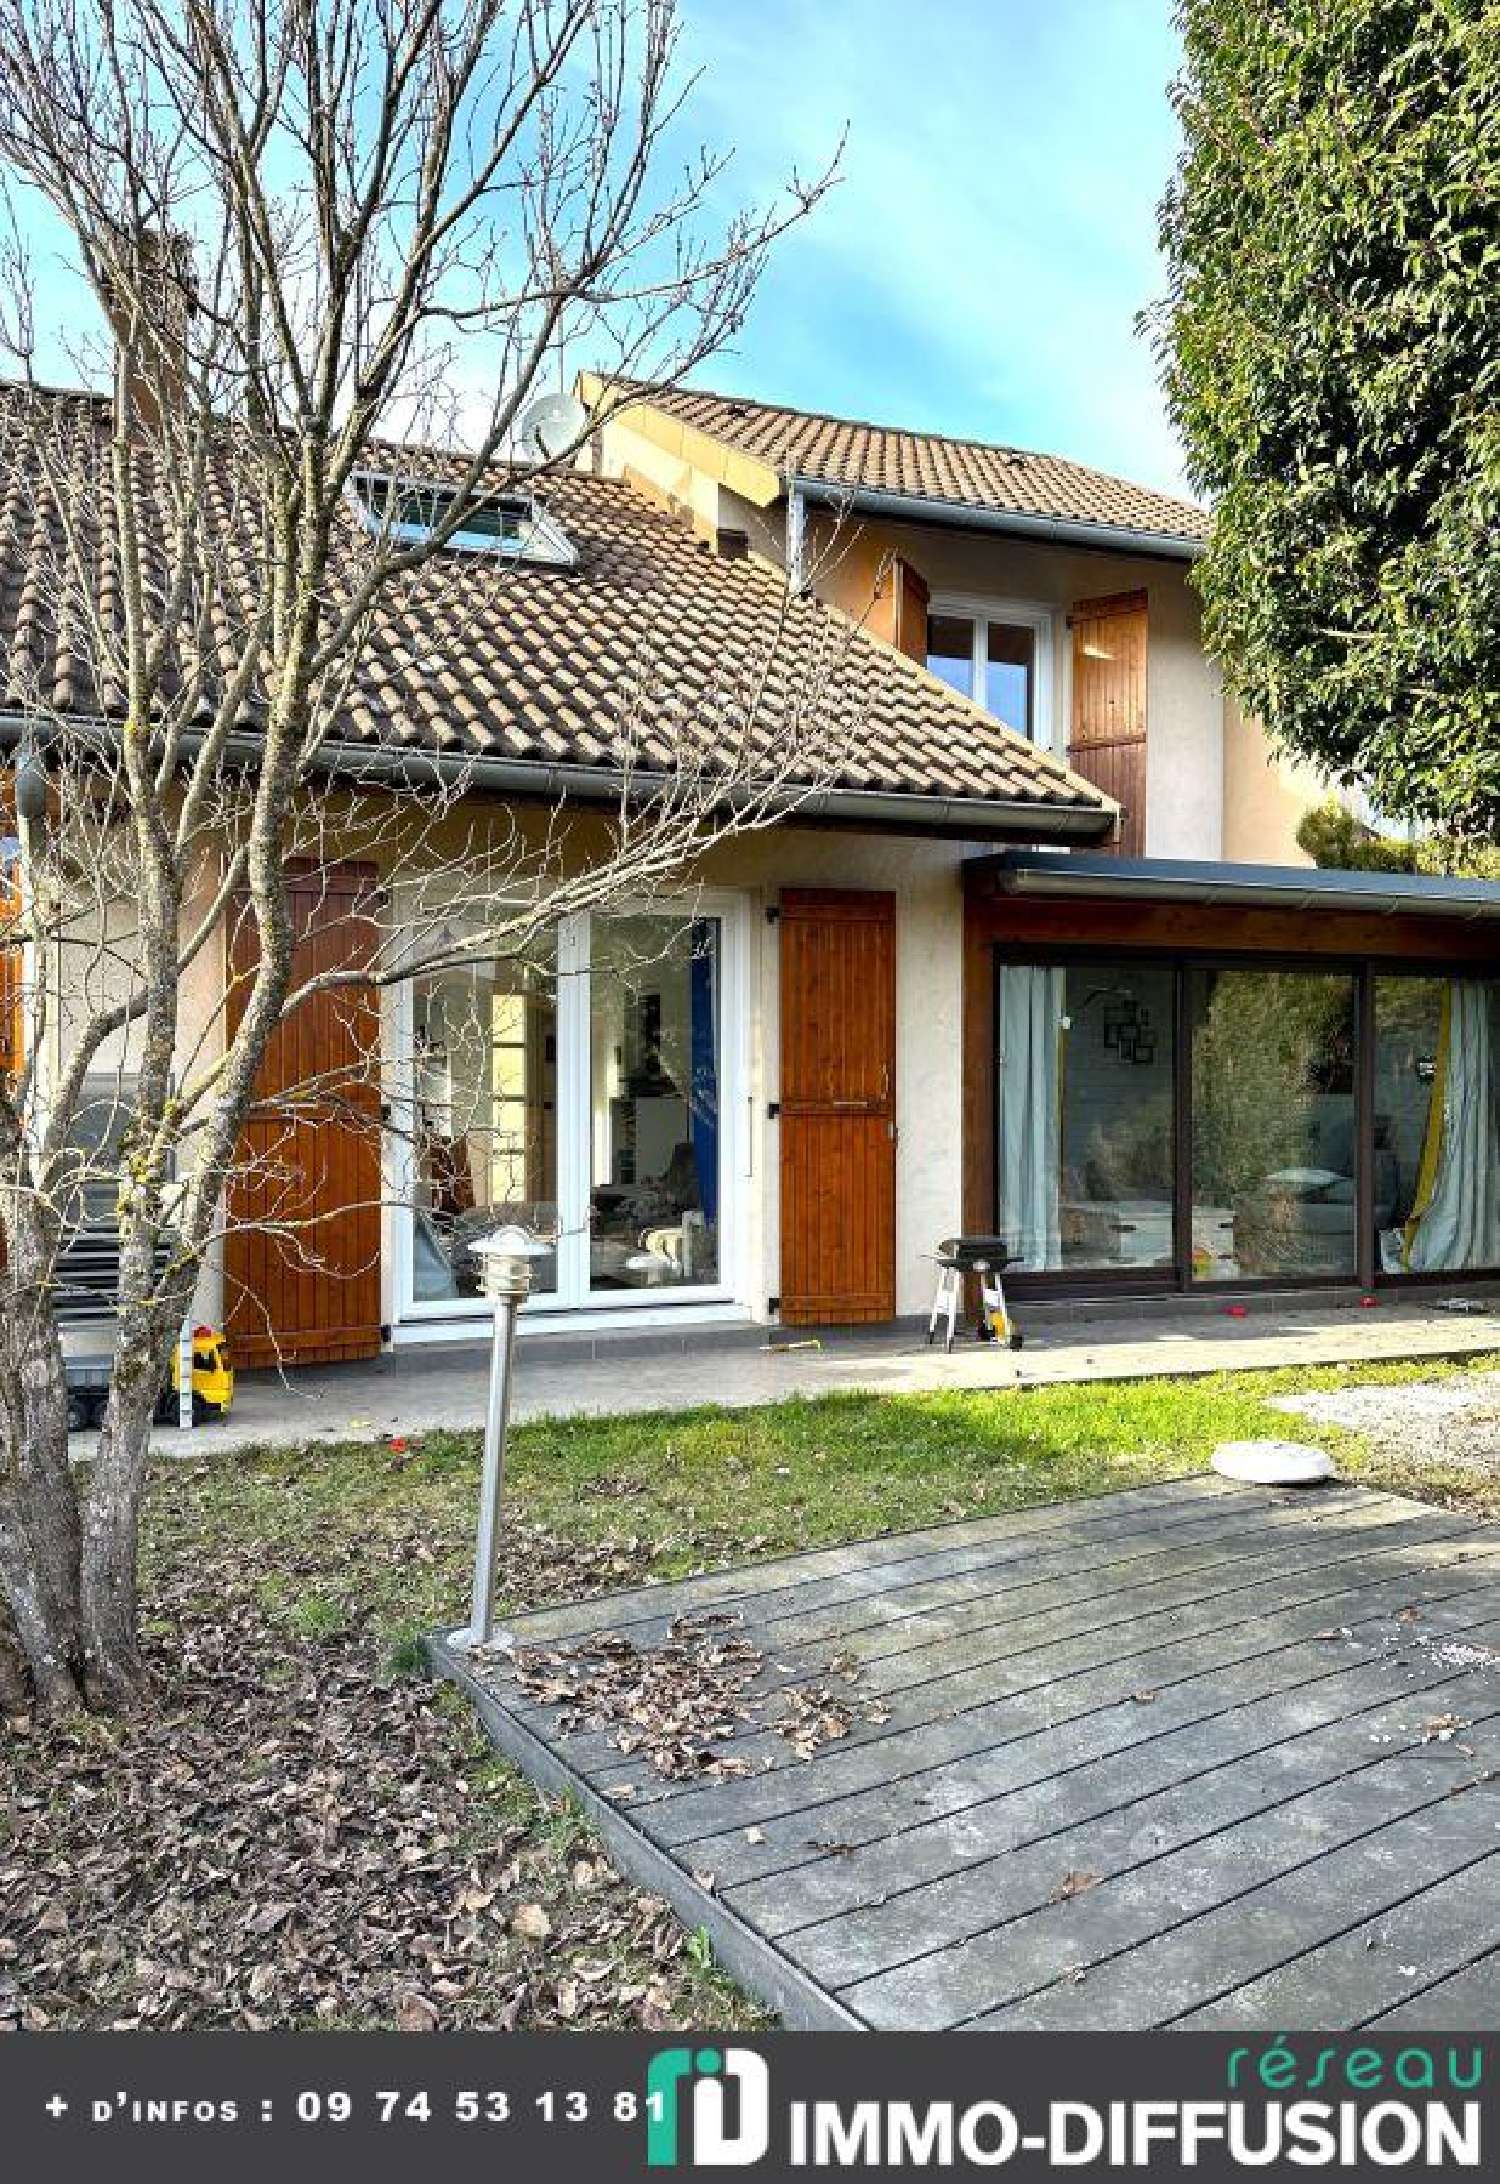  for sale house Metz-Tessy Haute-Savoie 1